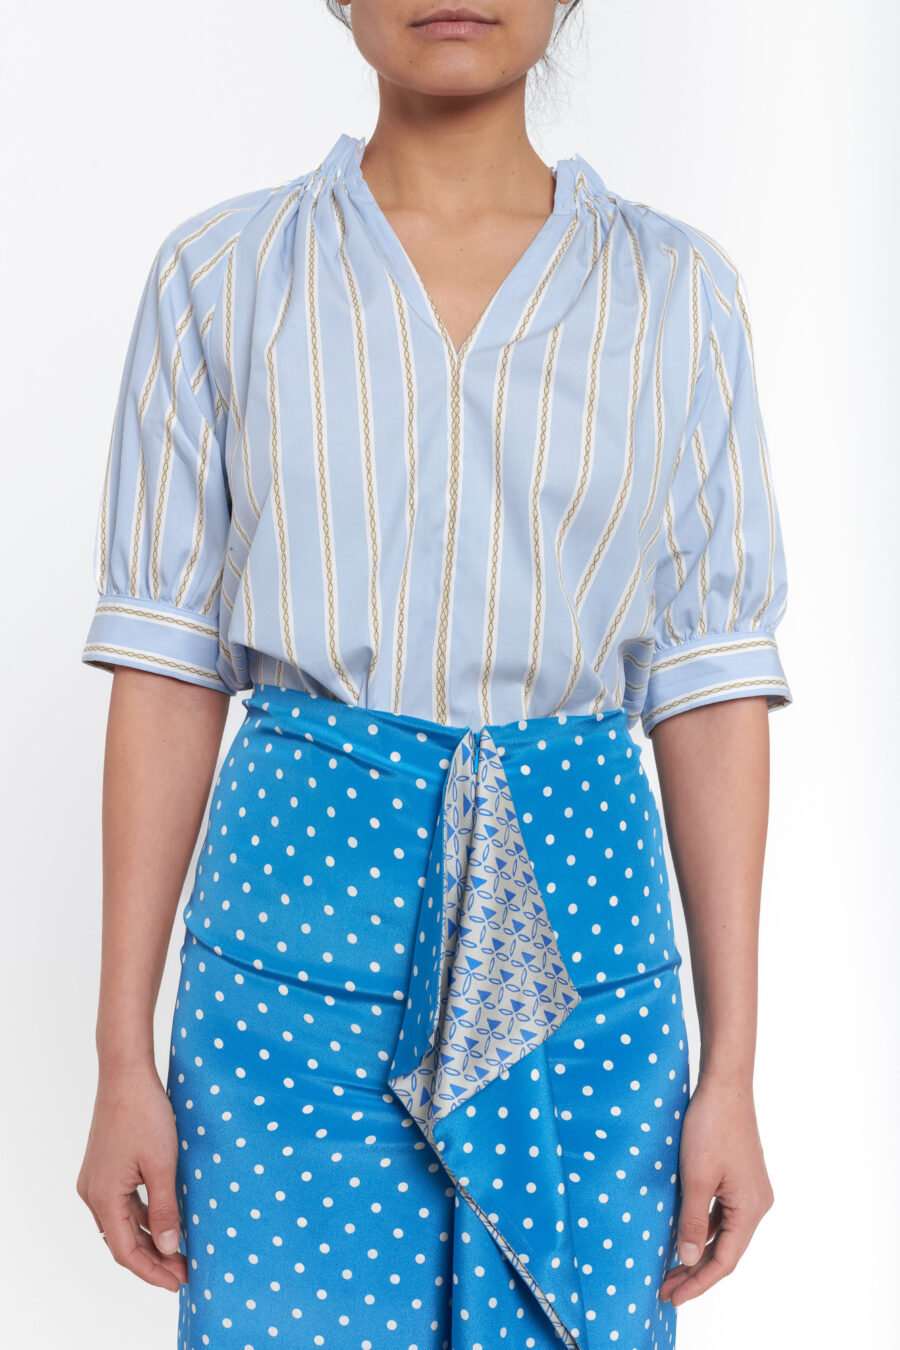 Skirt Naomi Ref 24.12.22 C 900x1350 - Skirt NAOMI